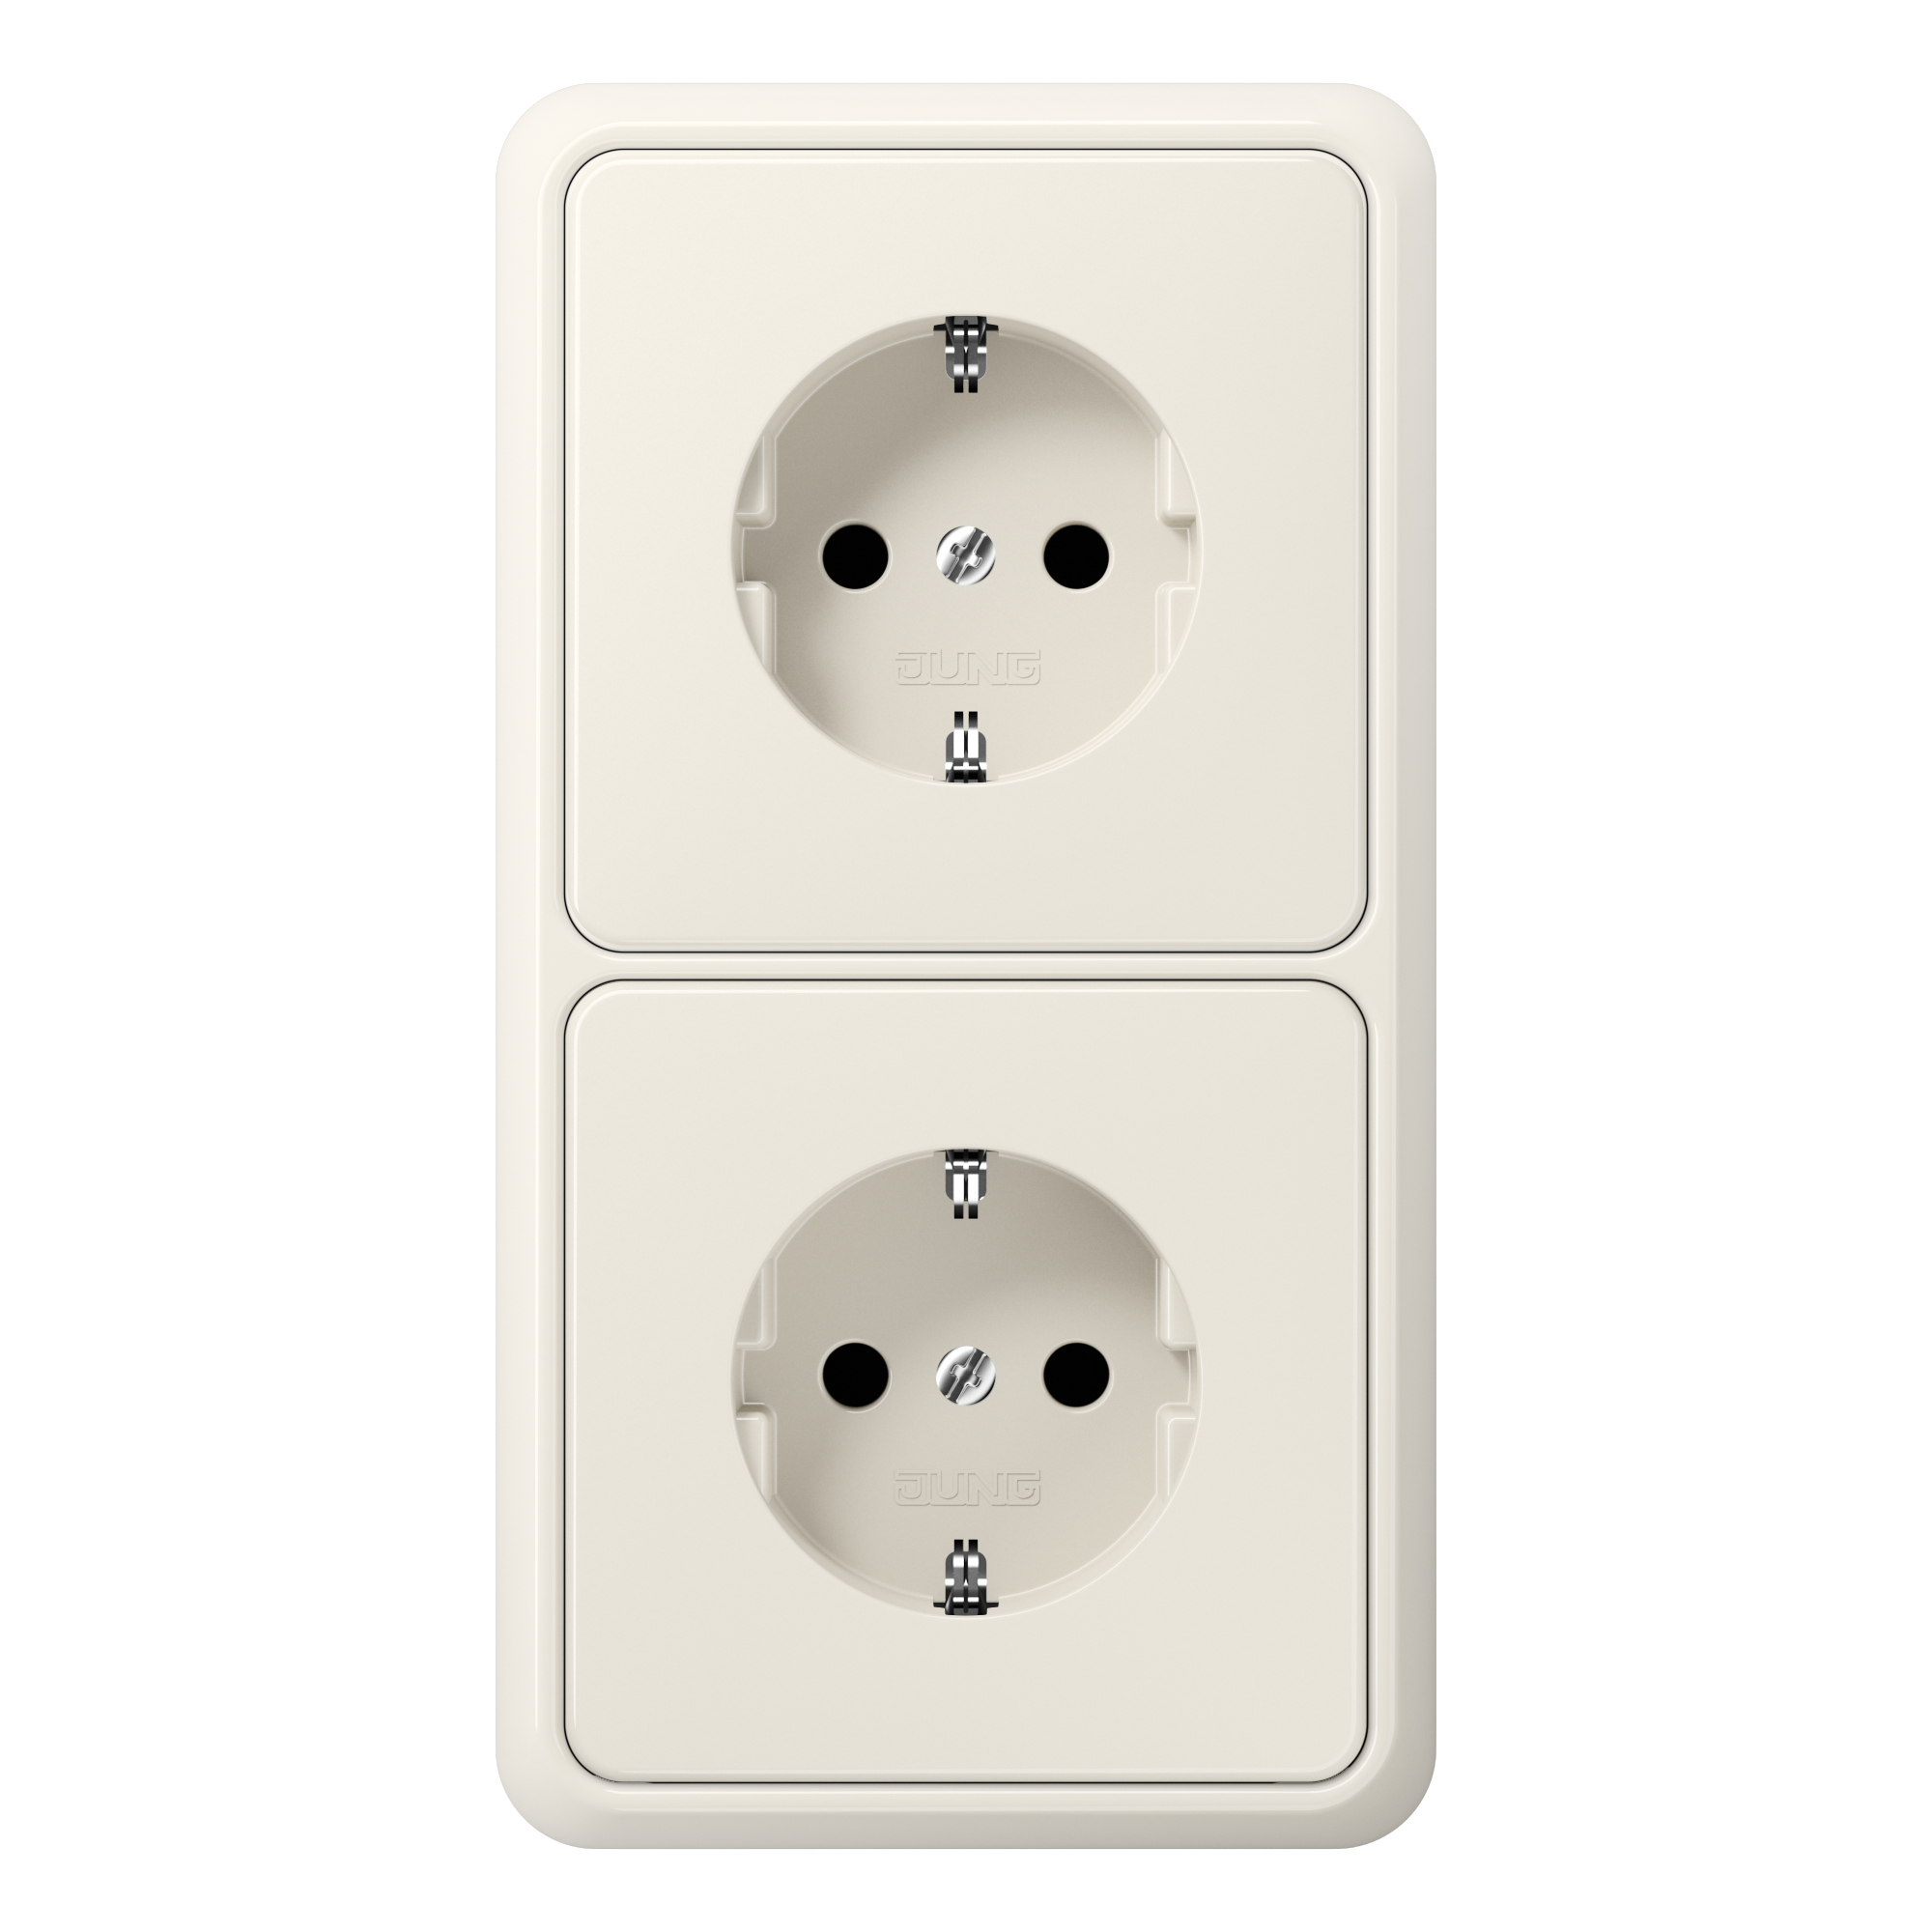 Power socket PNG image free Download 